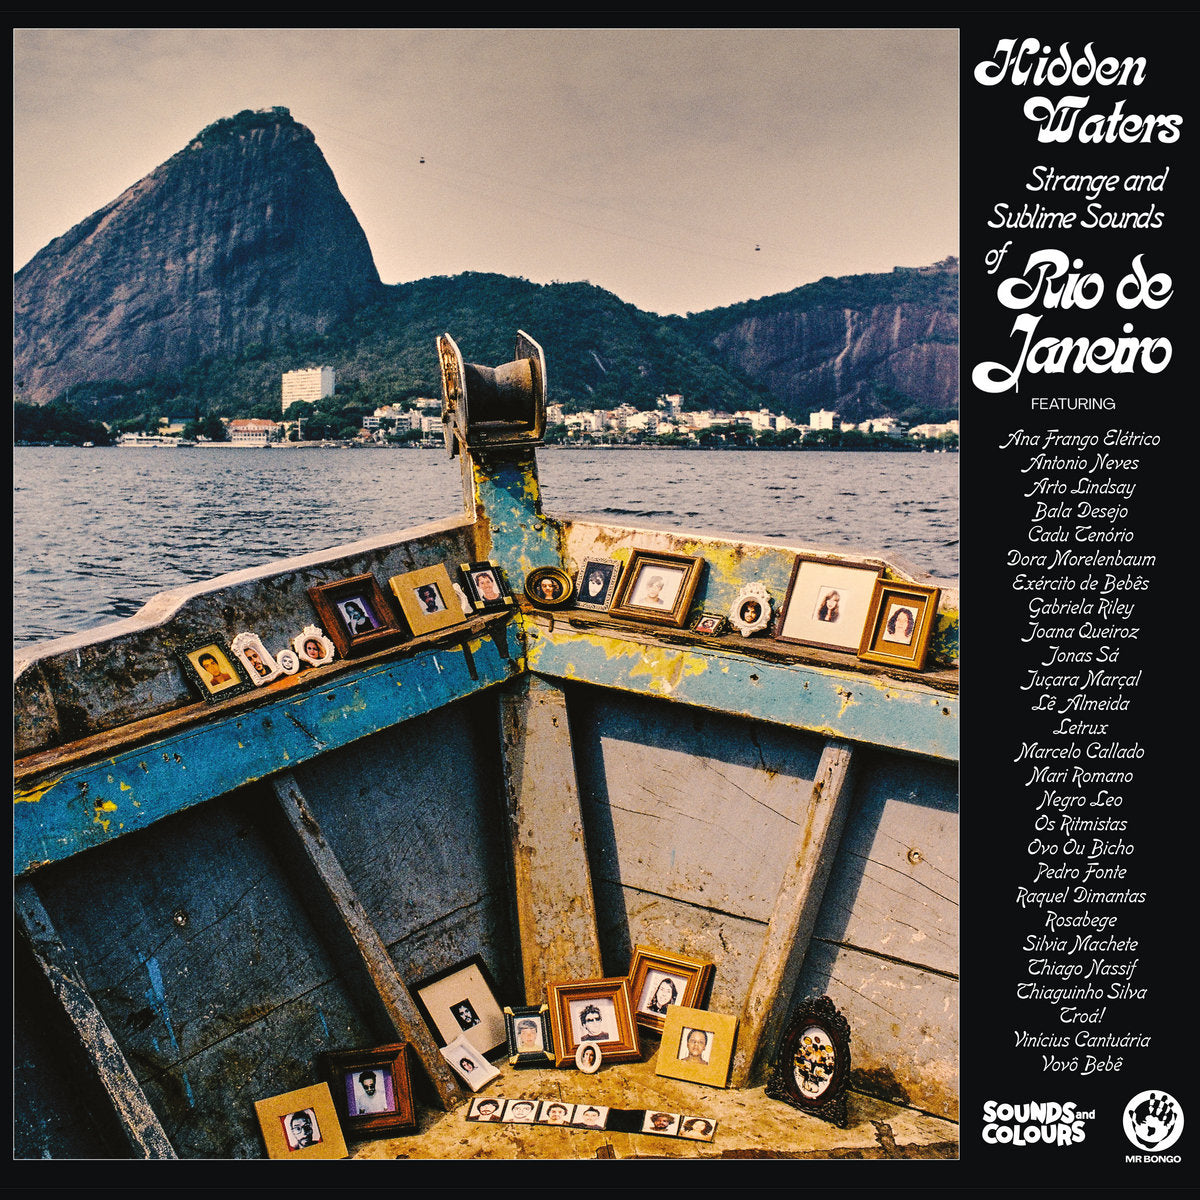 Hidden Waters: Strange and Sublime Sounds of Rio de Janeiro (New 2LP)